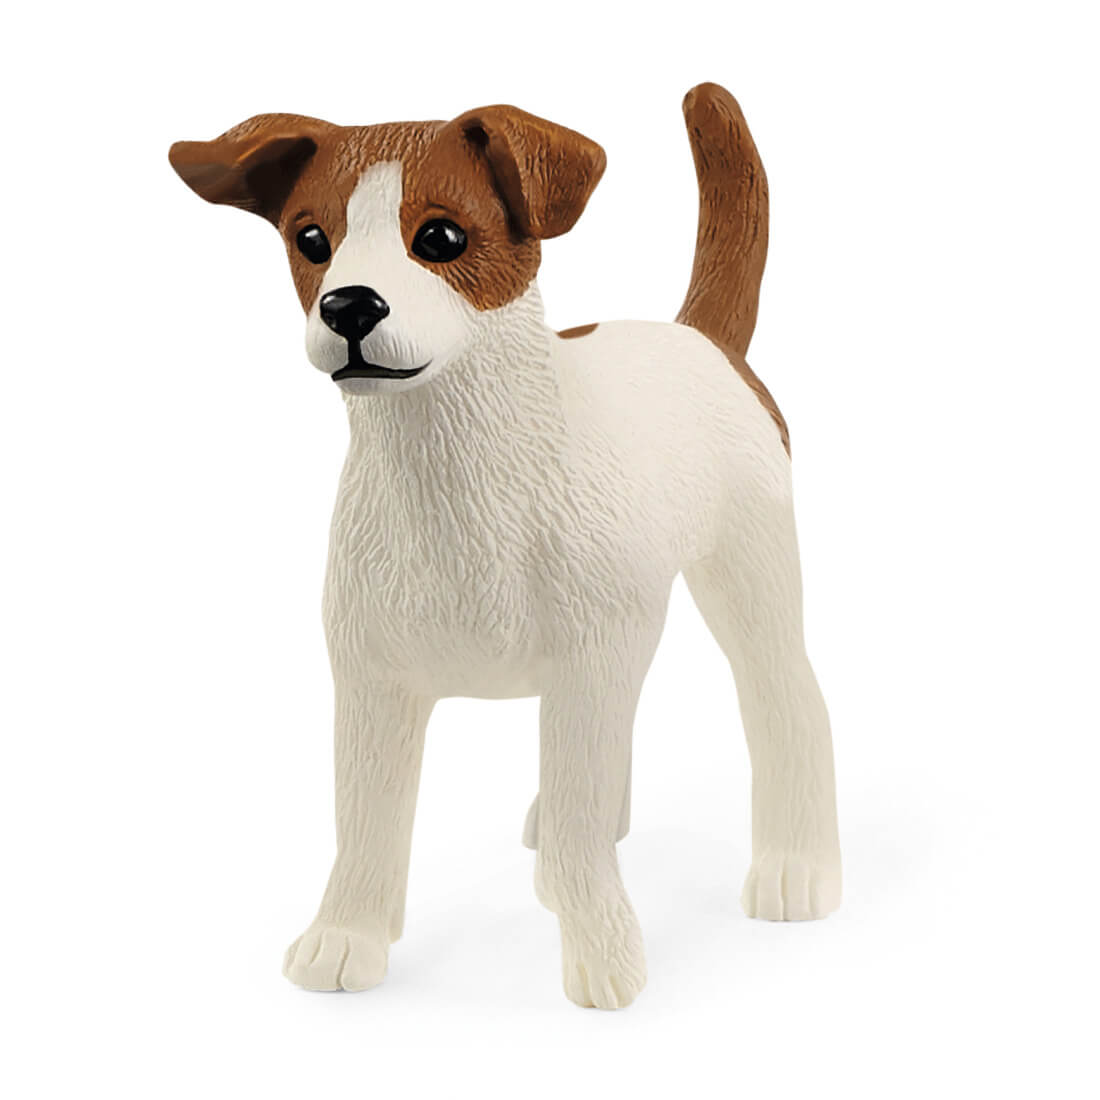 Schleich Farm World Jack Russell Terrier Animal Figure (13916)